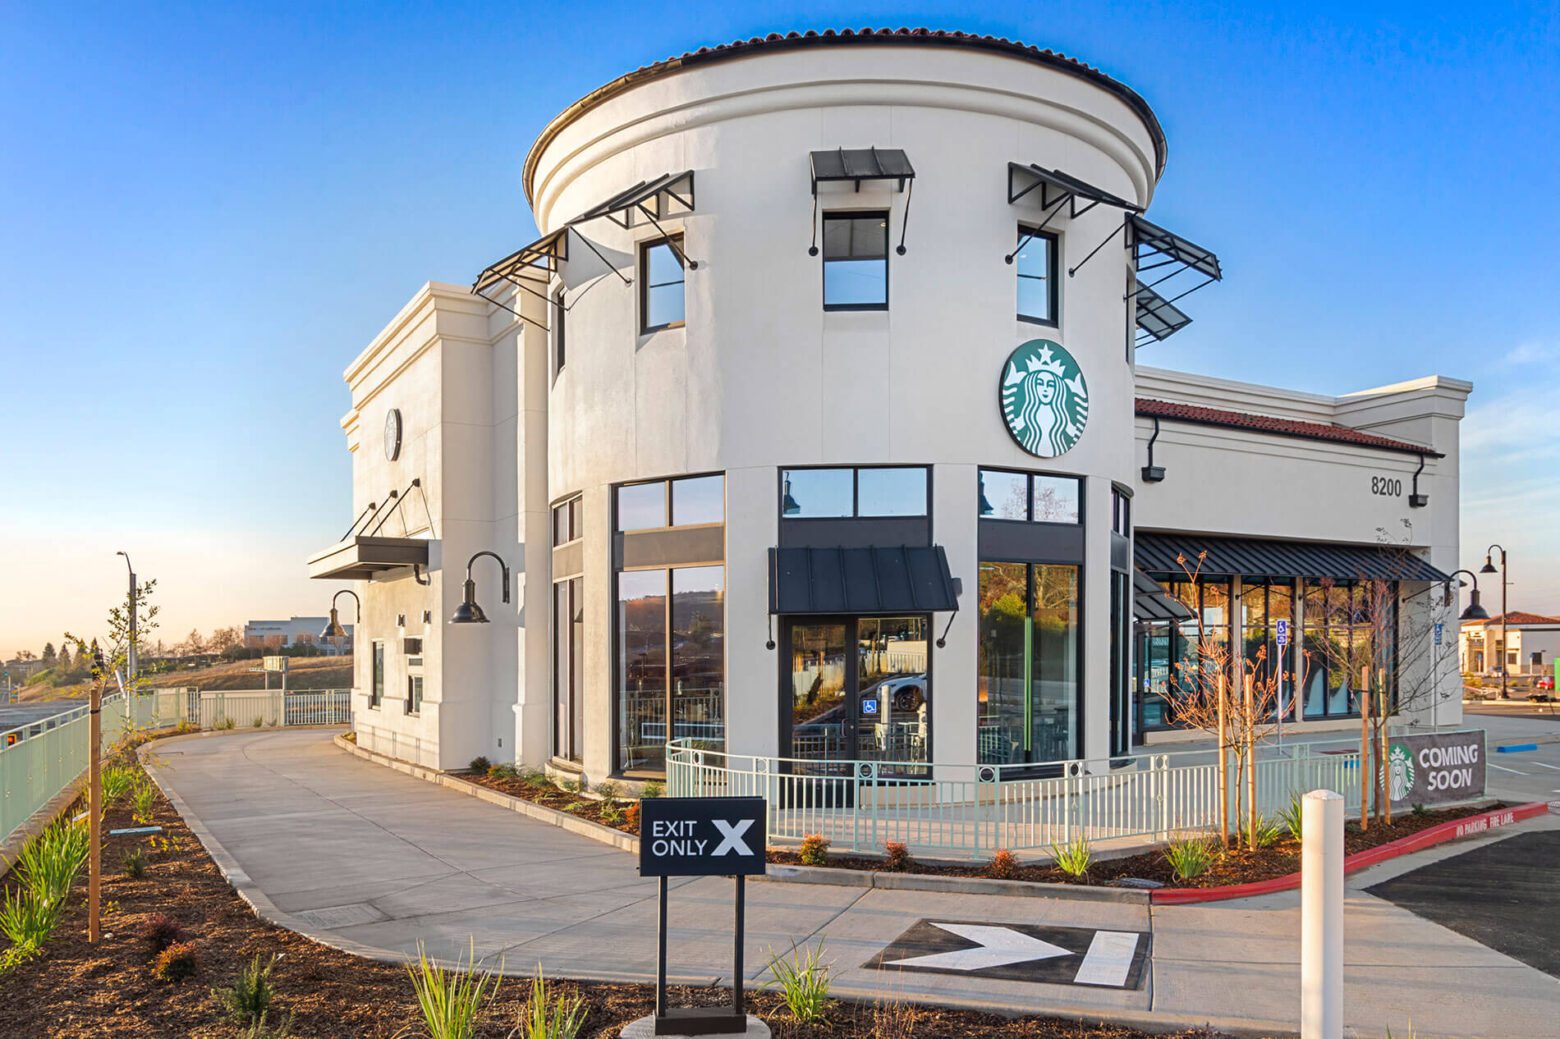 Starbucks build on Saratoga Way